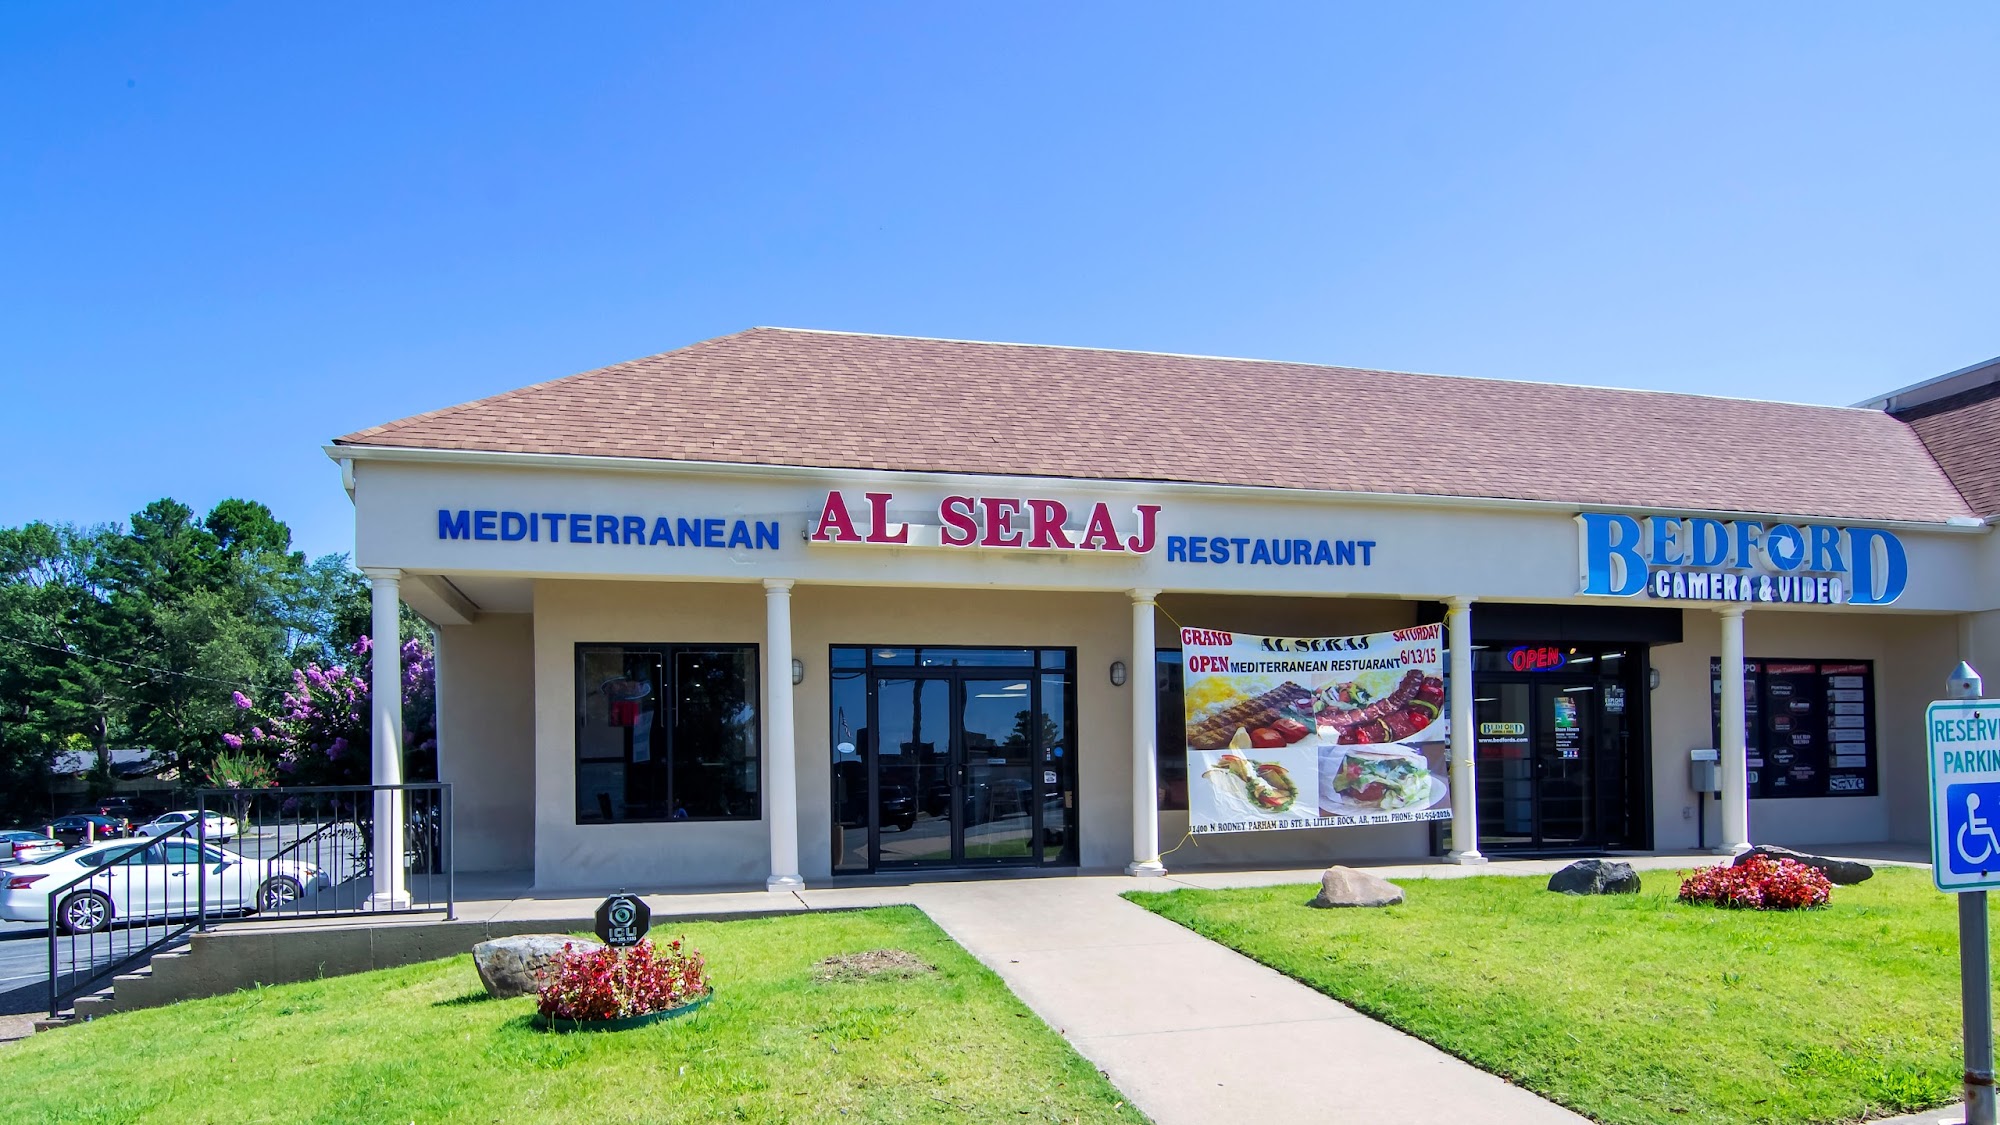 Al Seraj Mediterranean Restaurant & Market